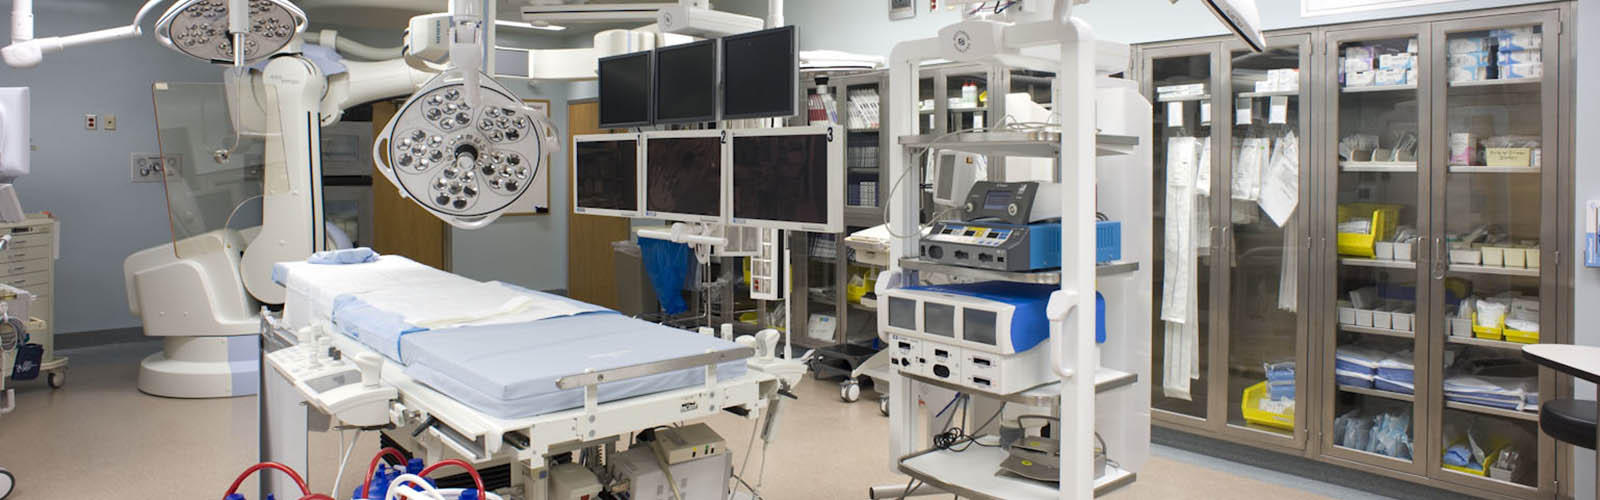 University of Missouri Health Care – Hybrid Operating Room 1